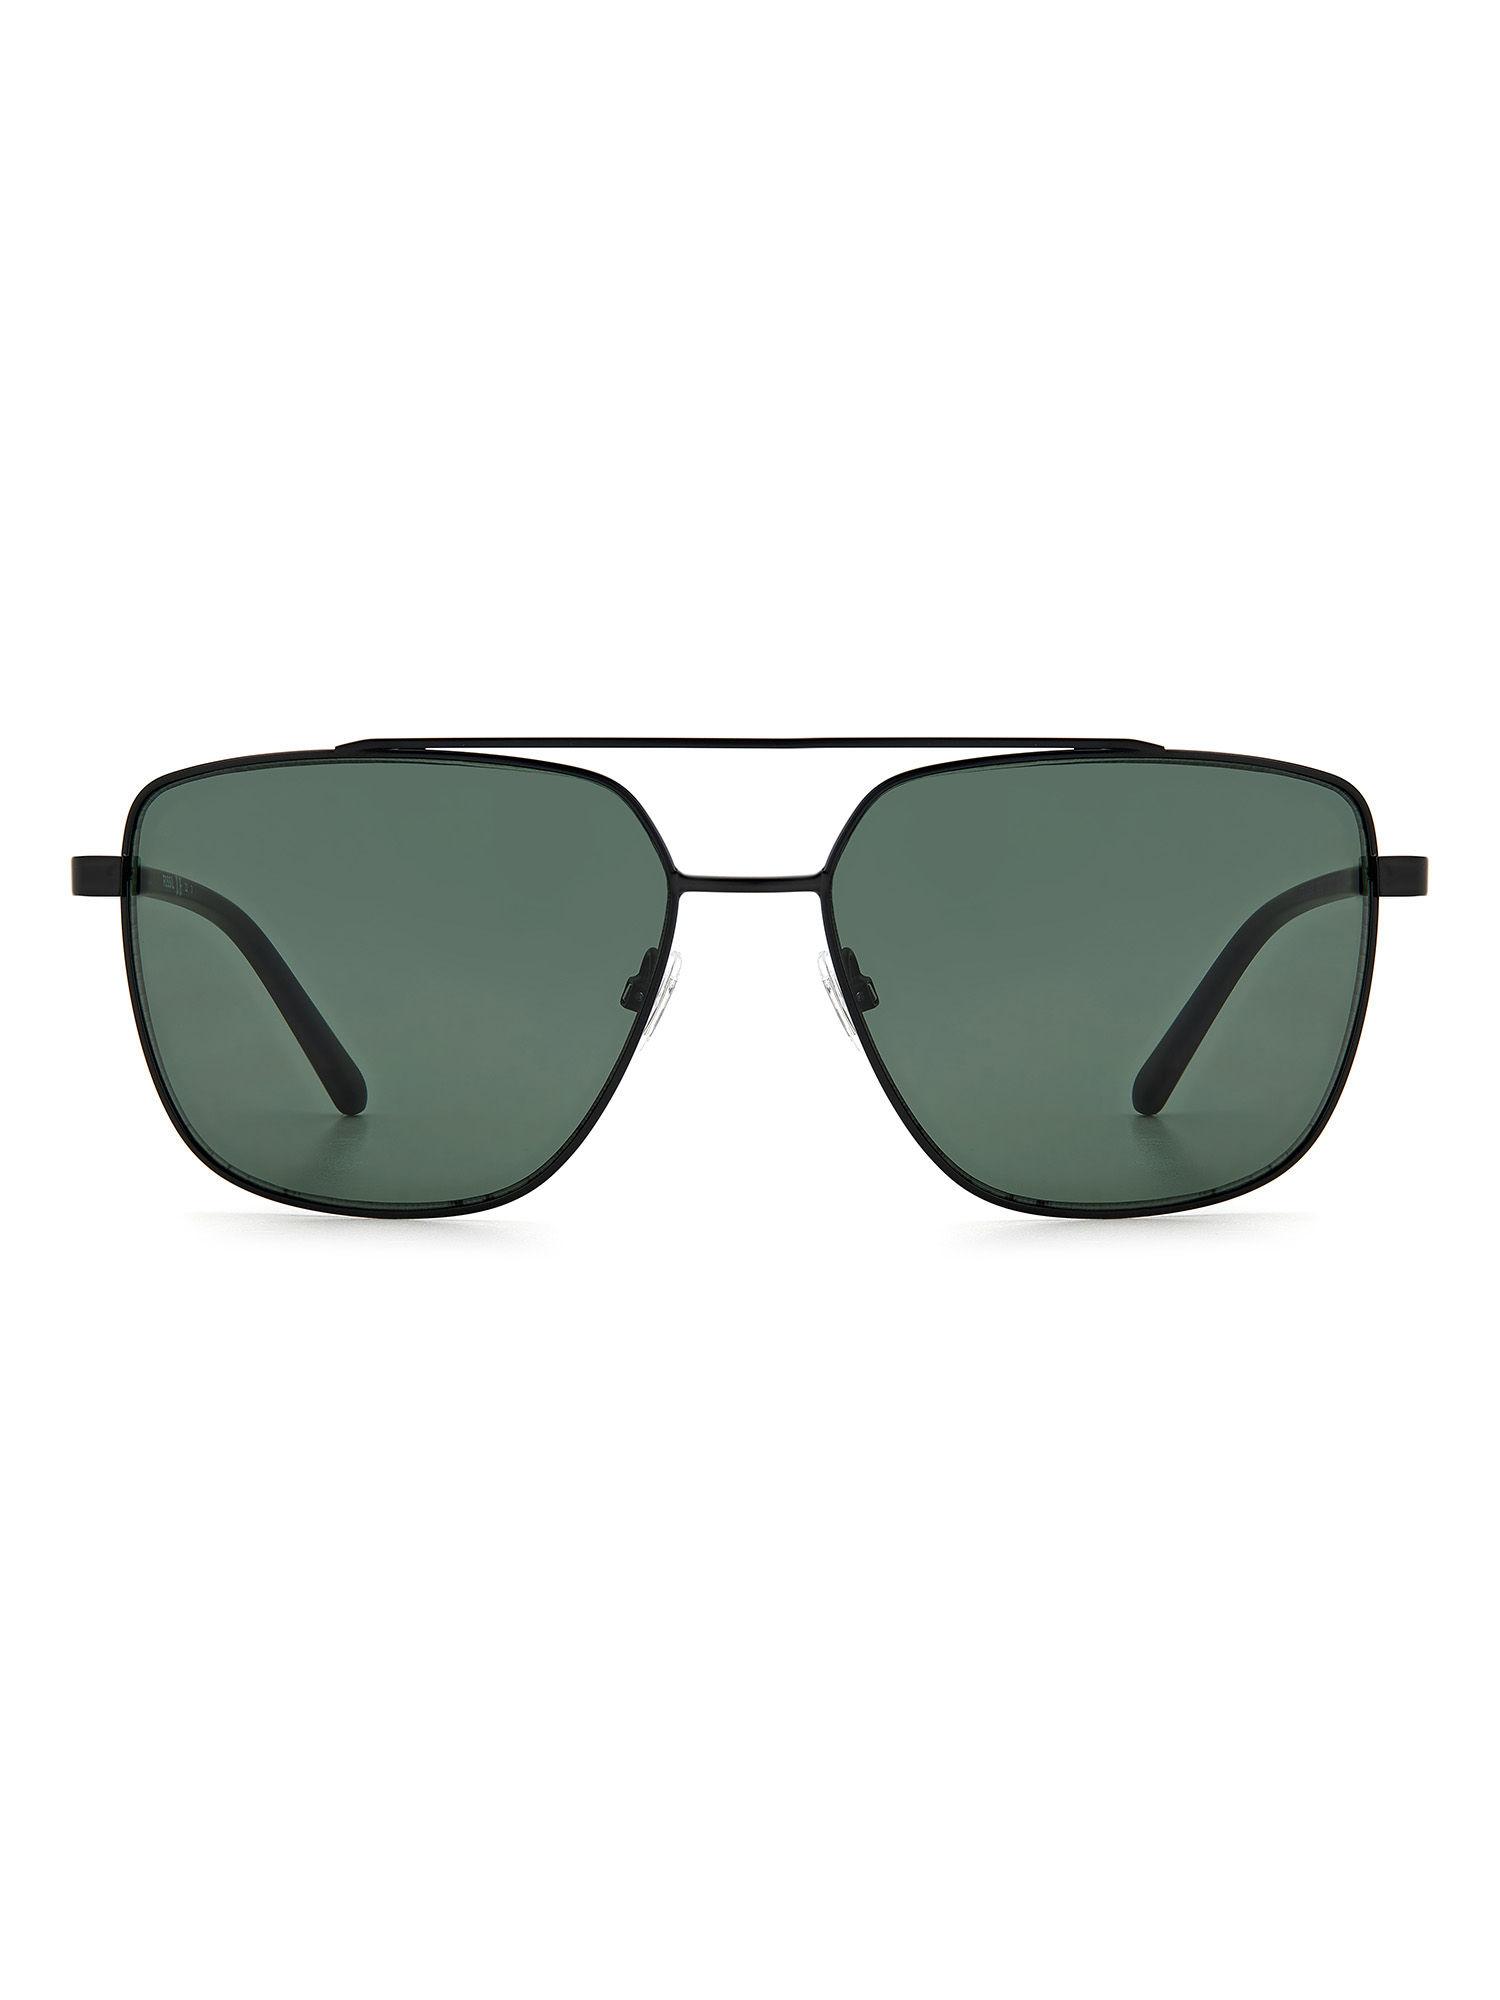 green lens square sunglass full-rim matte black frame - 20474700359qt